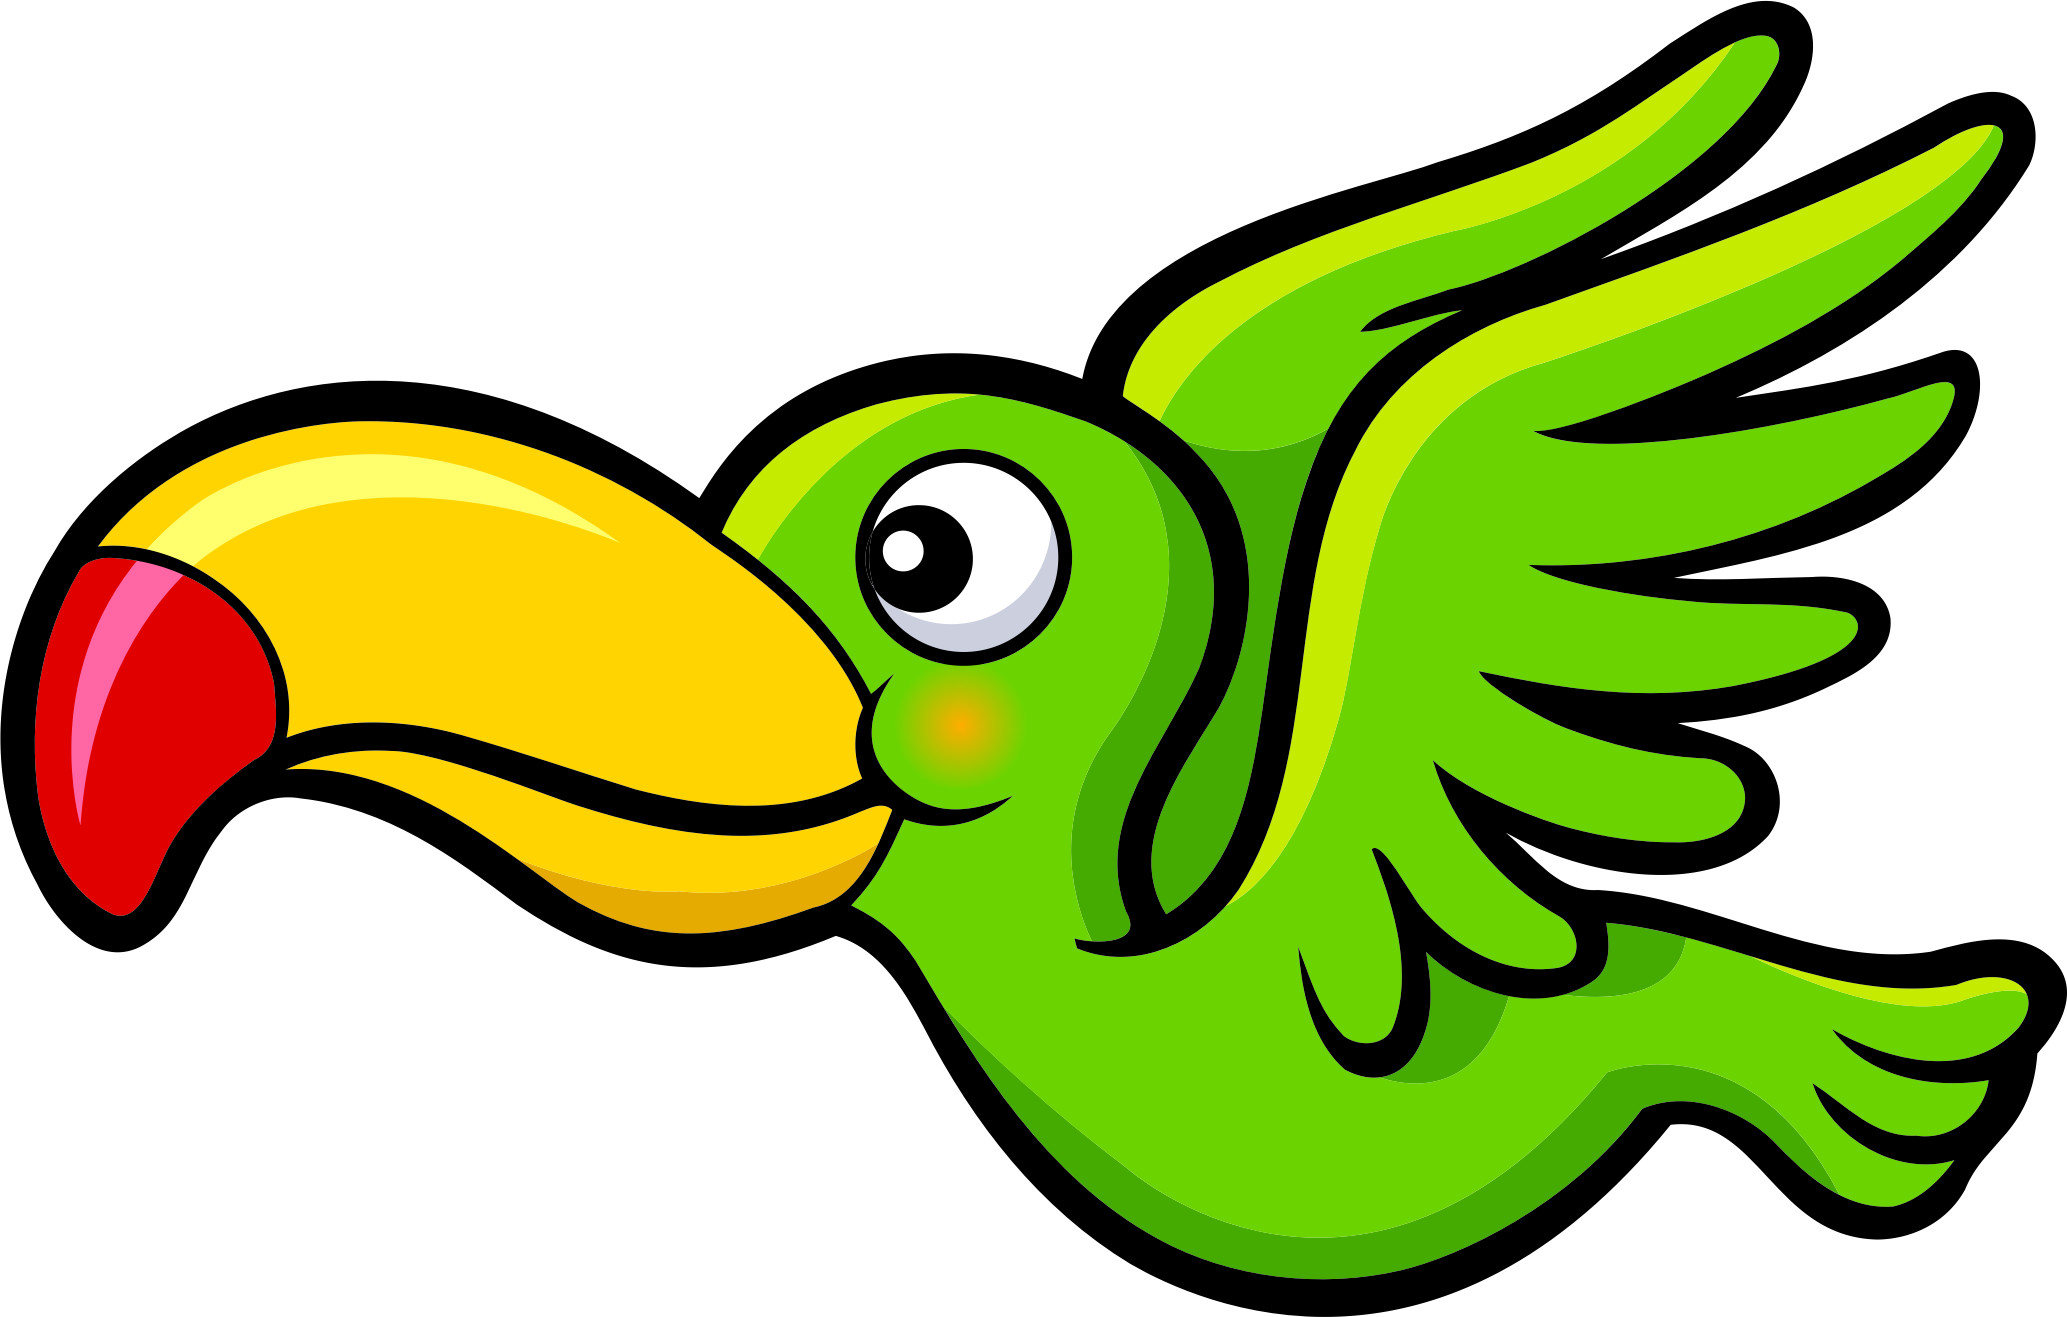 Bird animated big image. Flying clipart flyingbird